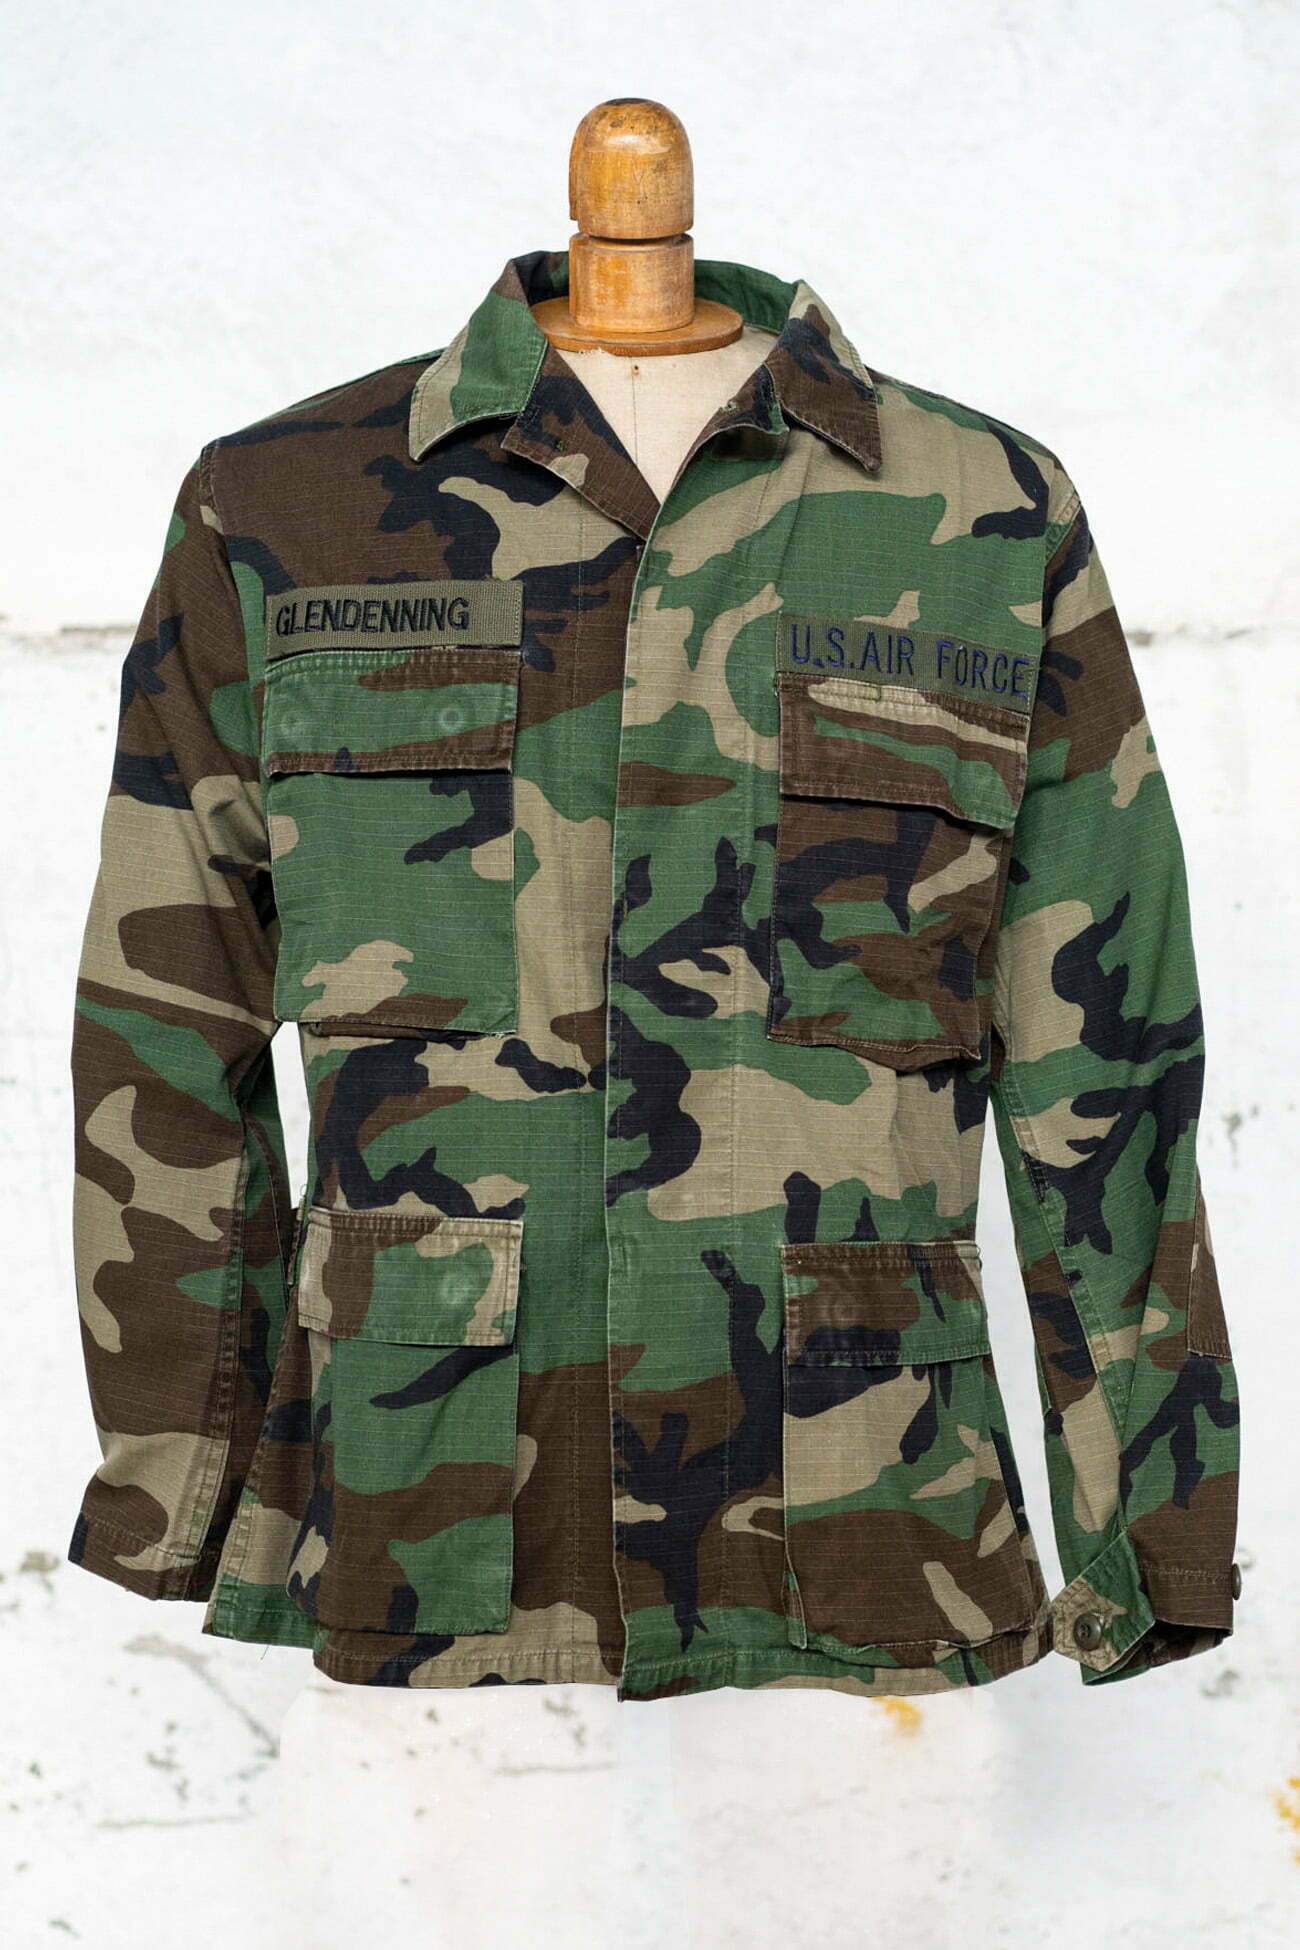 US Army Camo Shirt Glendening